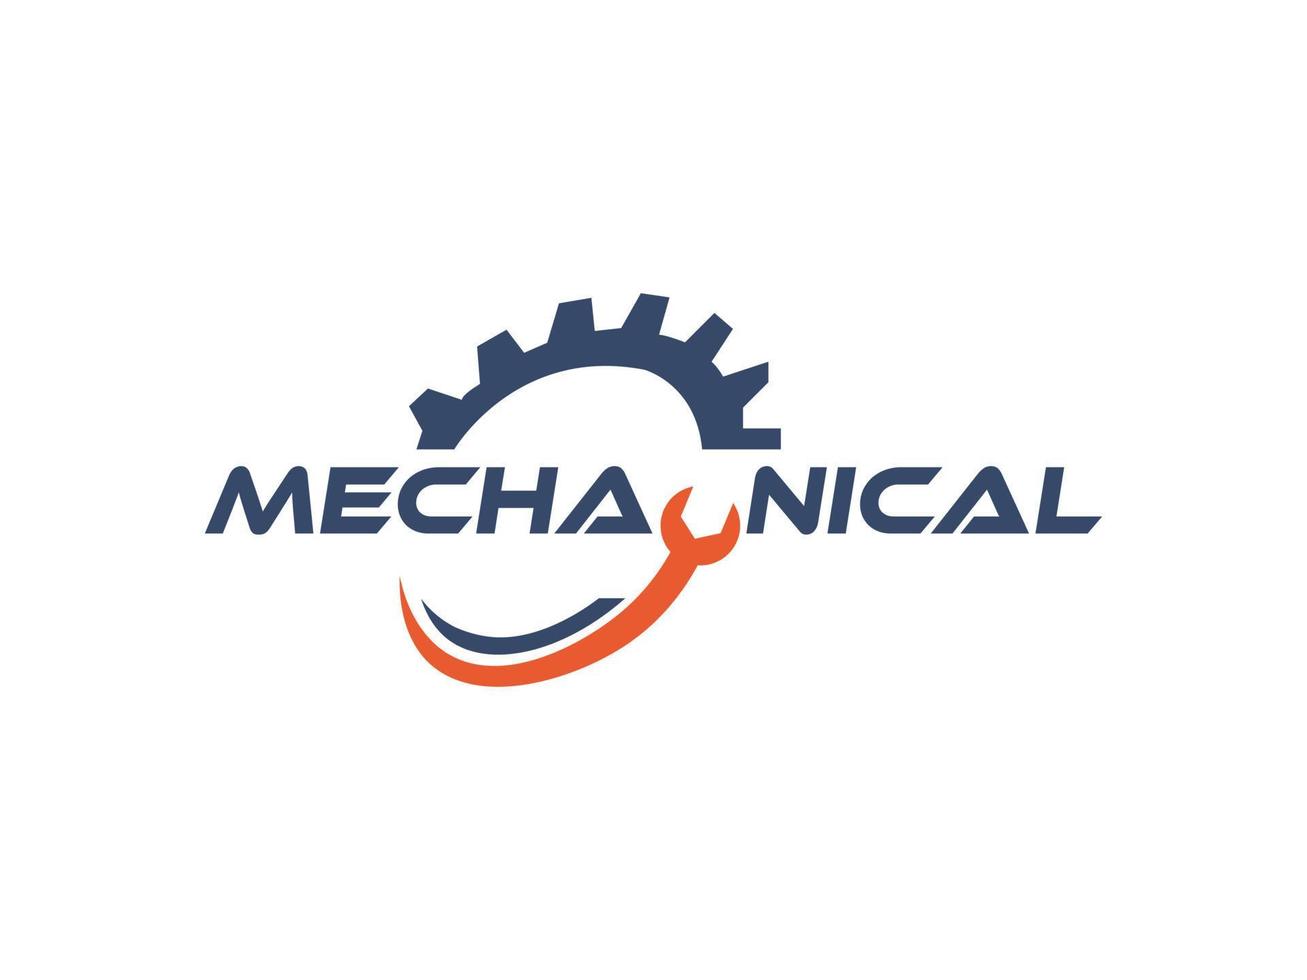 meccanico ingegneria logo design vettore modello